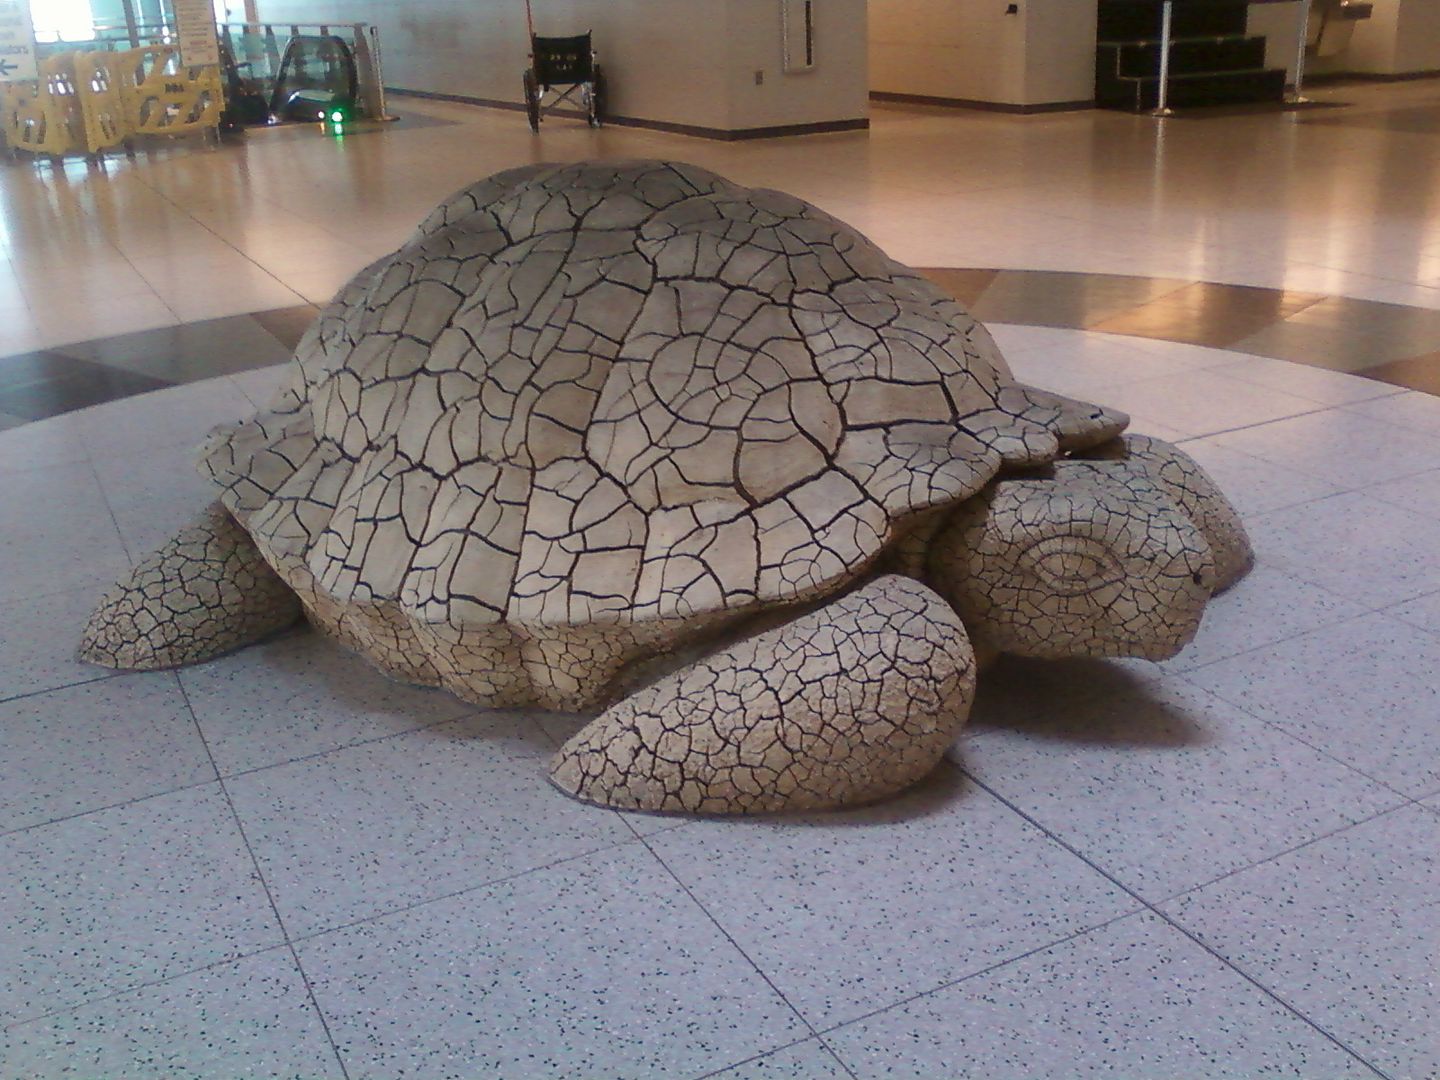 Turtle Sculpture, @ LV Airport